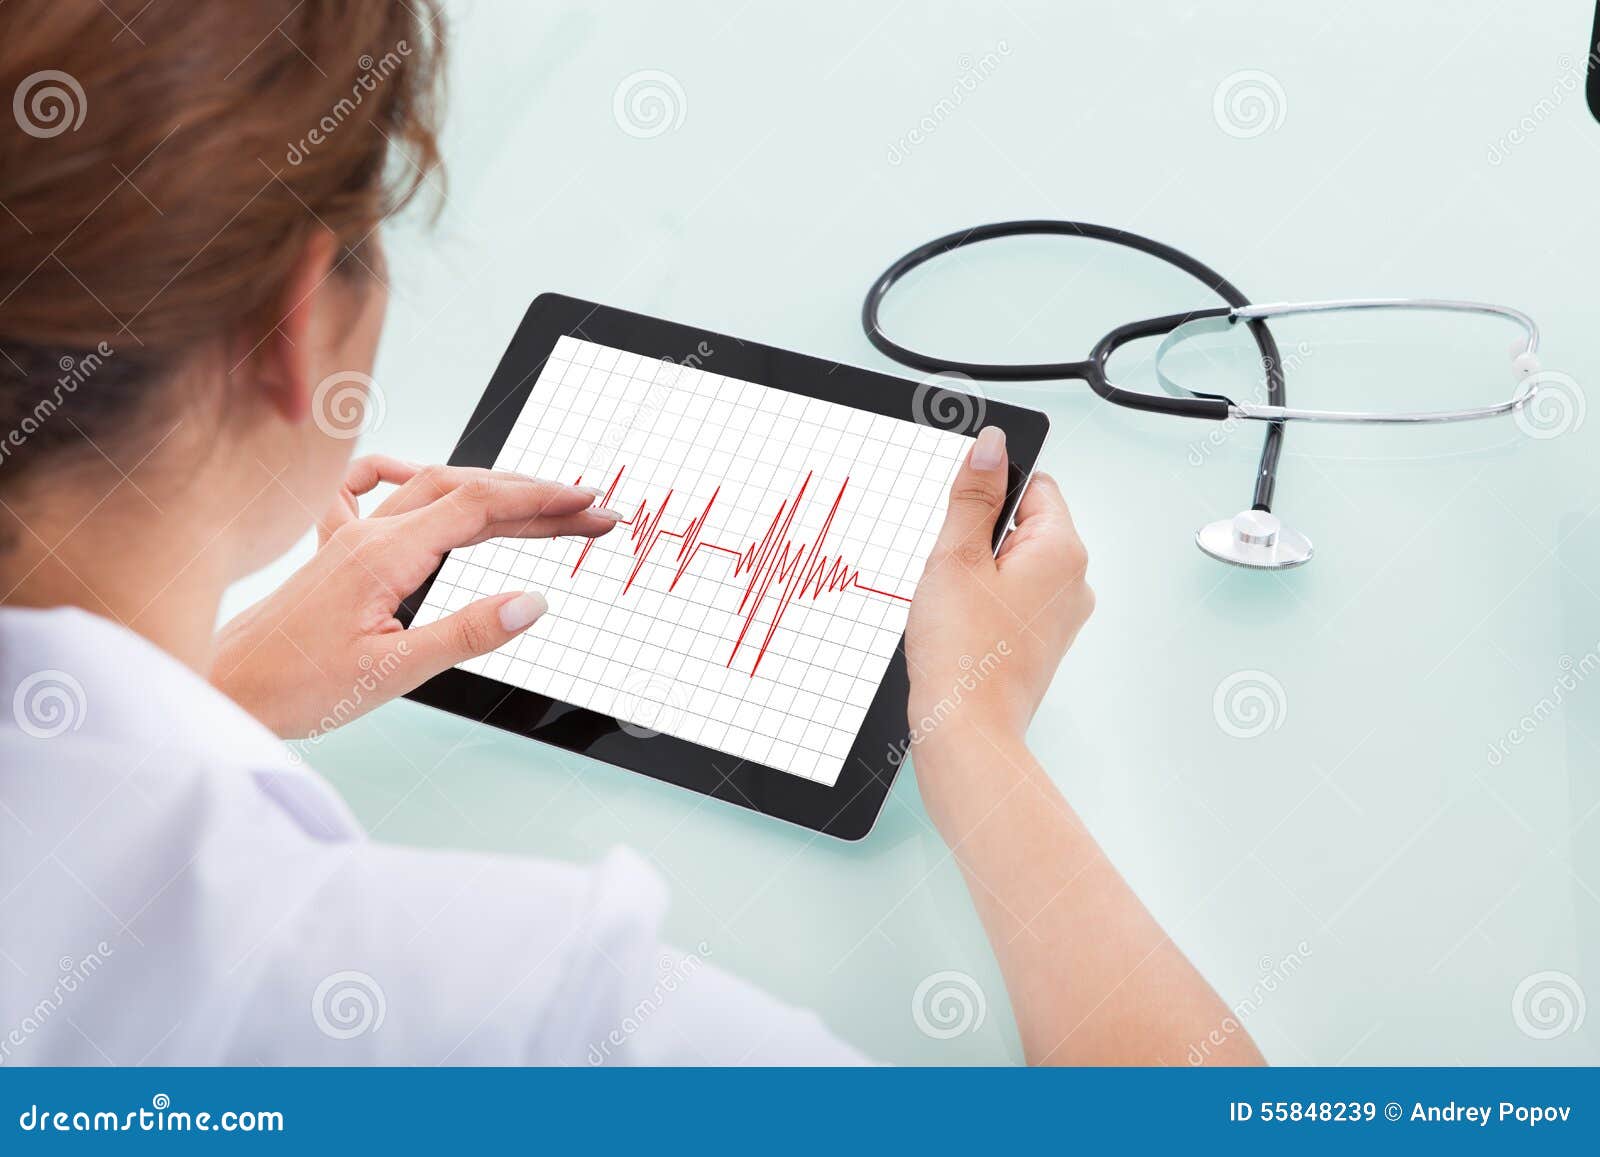 cardiologist analyzing heartbeat on digital tablet